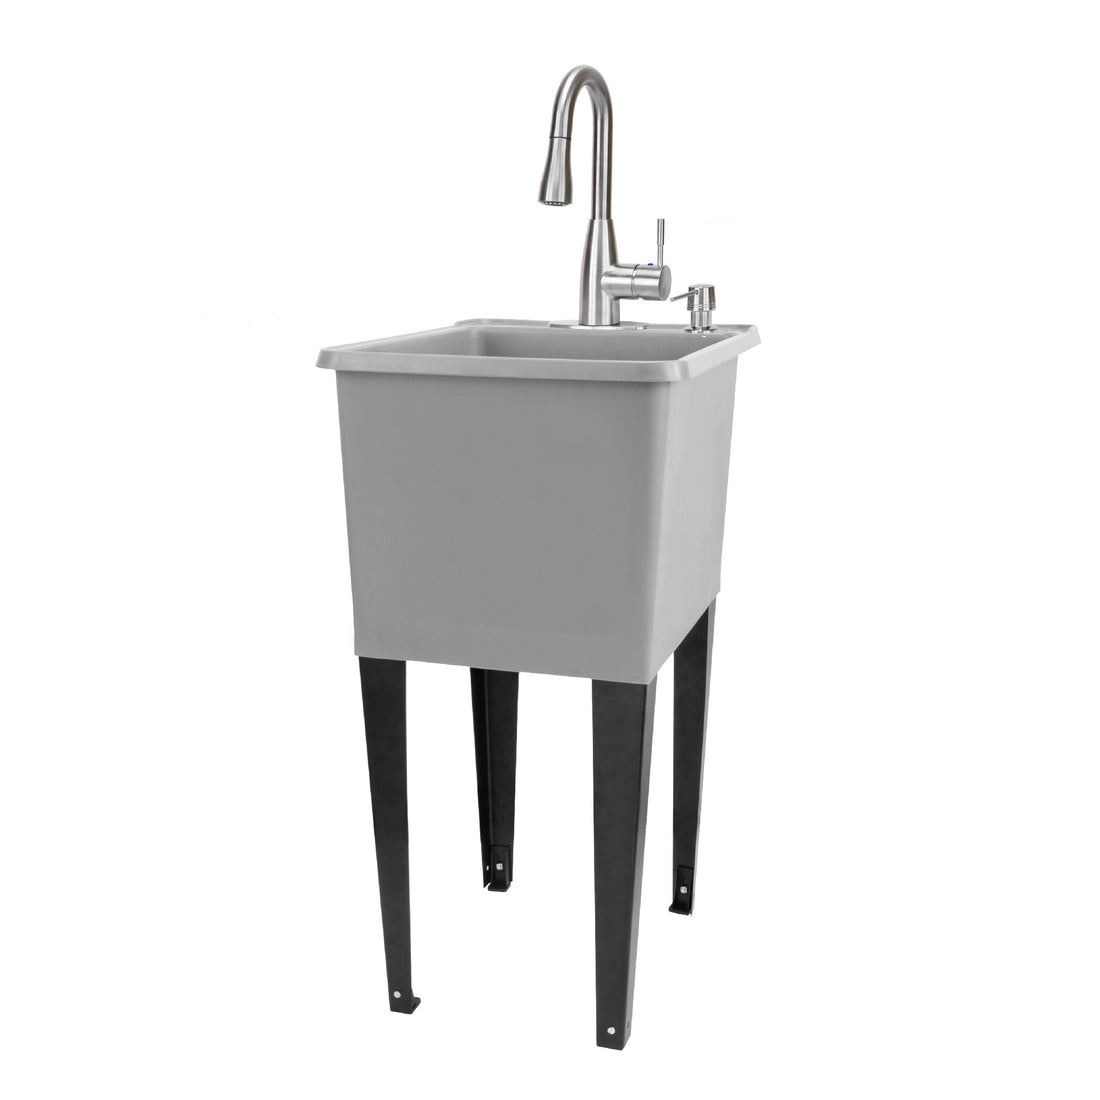 Tehila Space Saver Freestanding Grey Utility Sink with Stainless Steel Finish Low-Profile Pull-Down Faucet - Utility sinks vanites Tehila